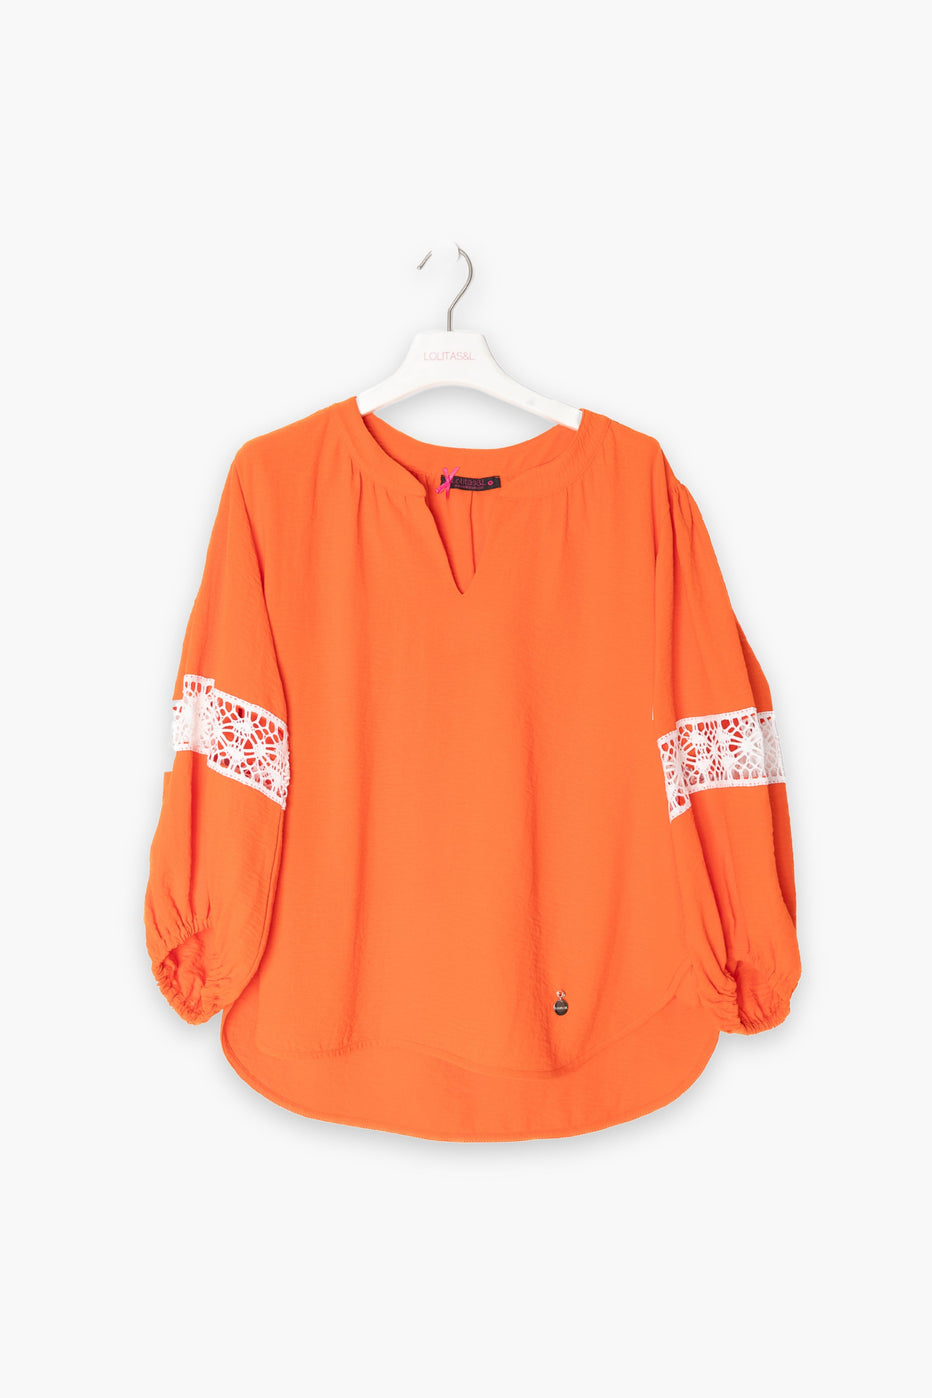 Camiseta naranja manga al codo con bordado ingles LolitasyL - lolitasyl.com